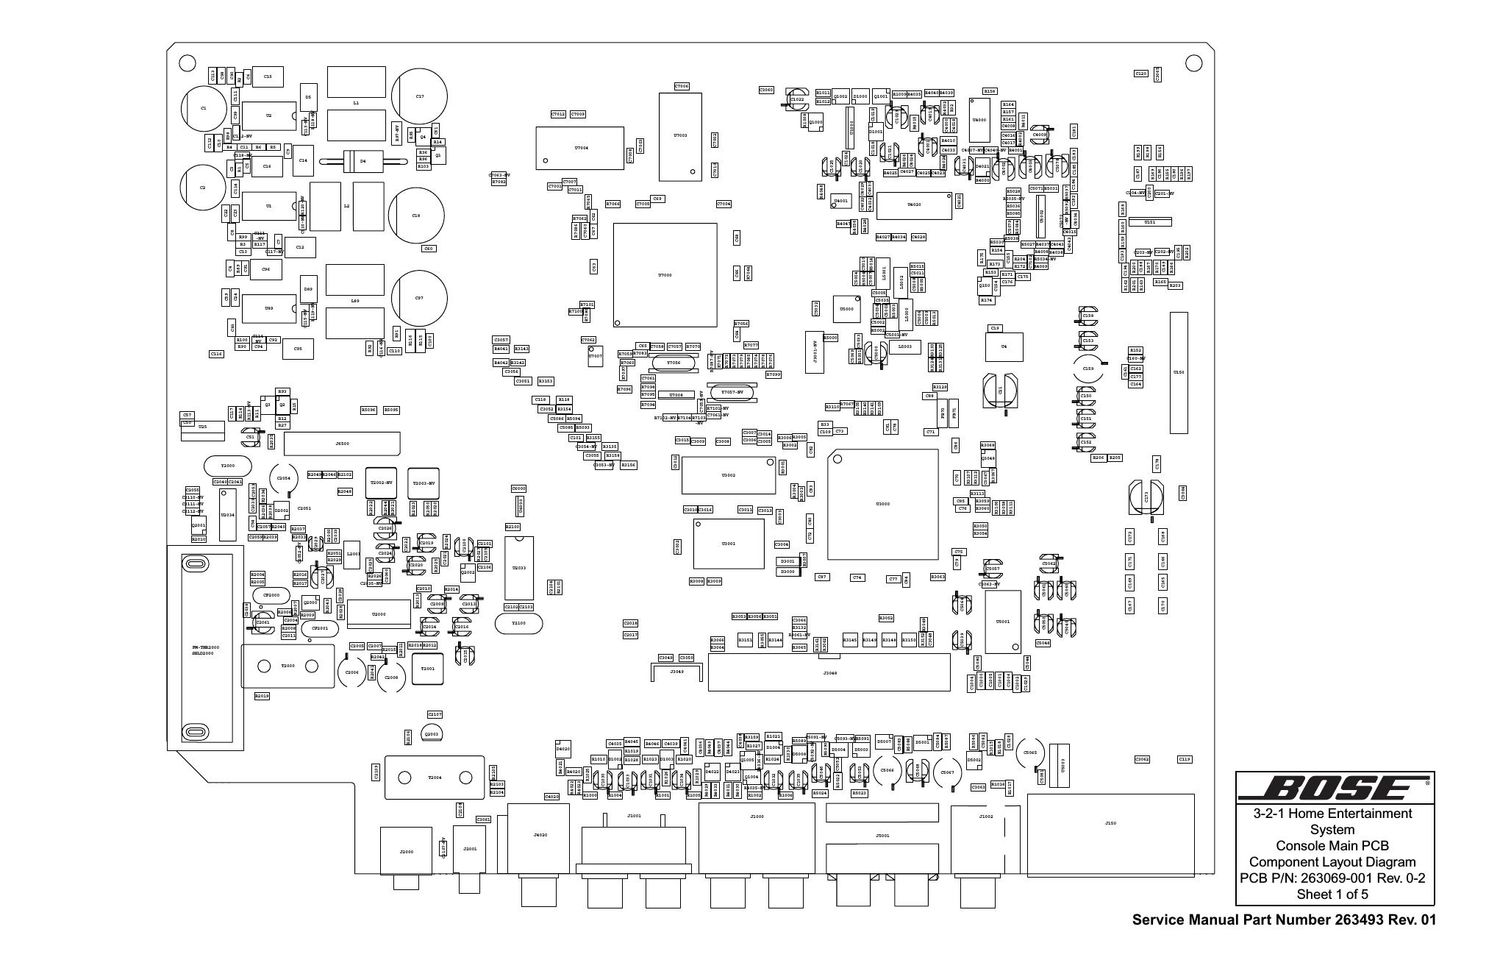 bose 321 321 main pcb layout sheet